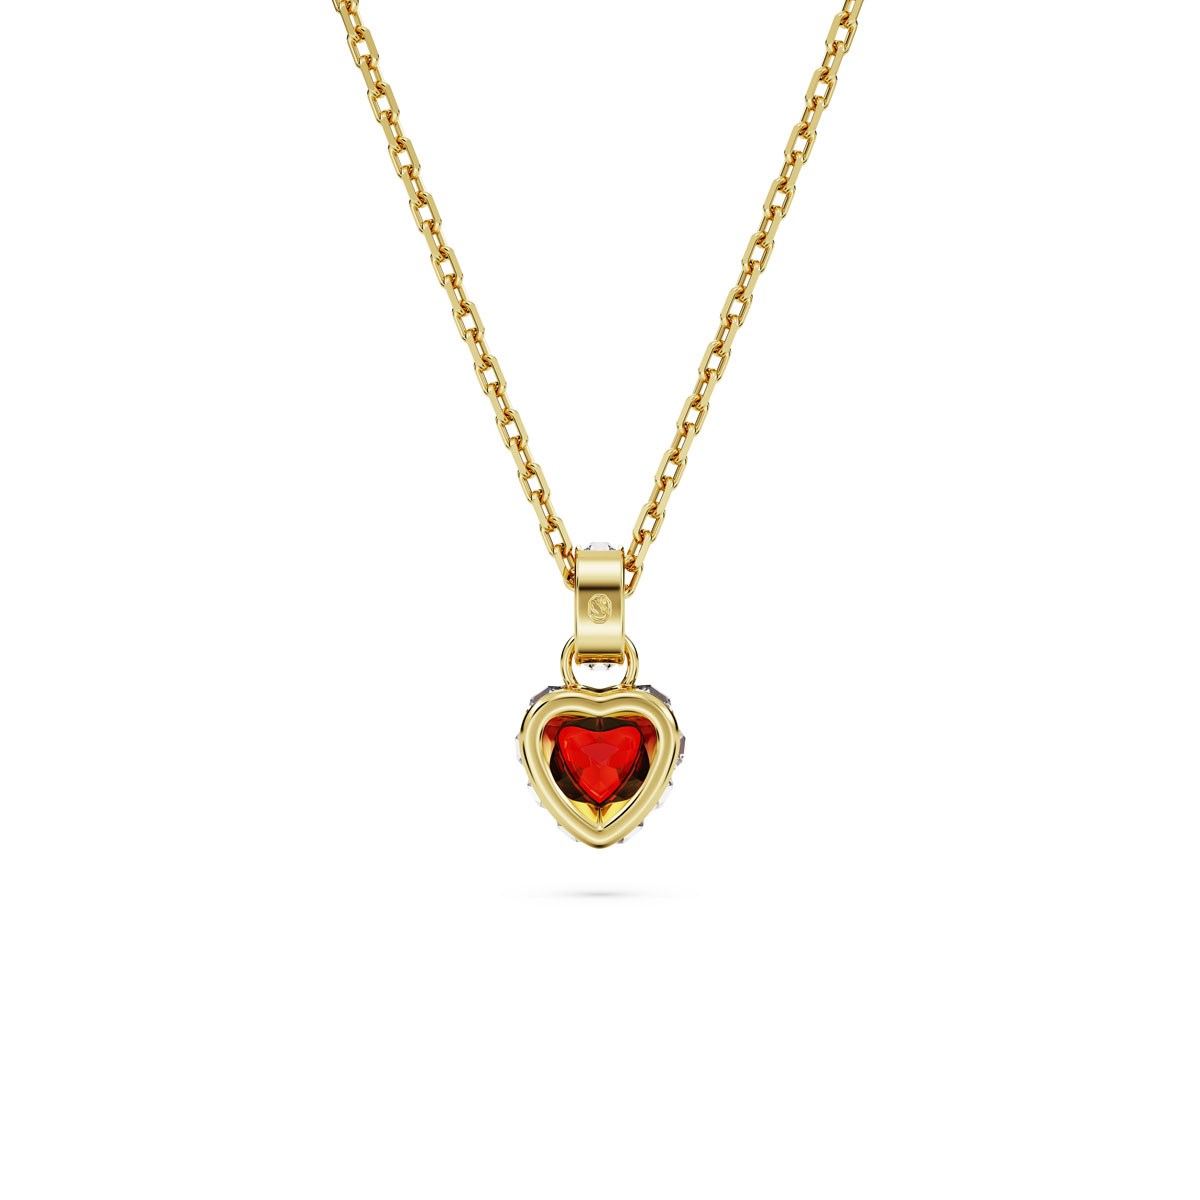 Swarovski Jewelry Stilla Red Heart and Gold Pendant Necklace